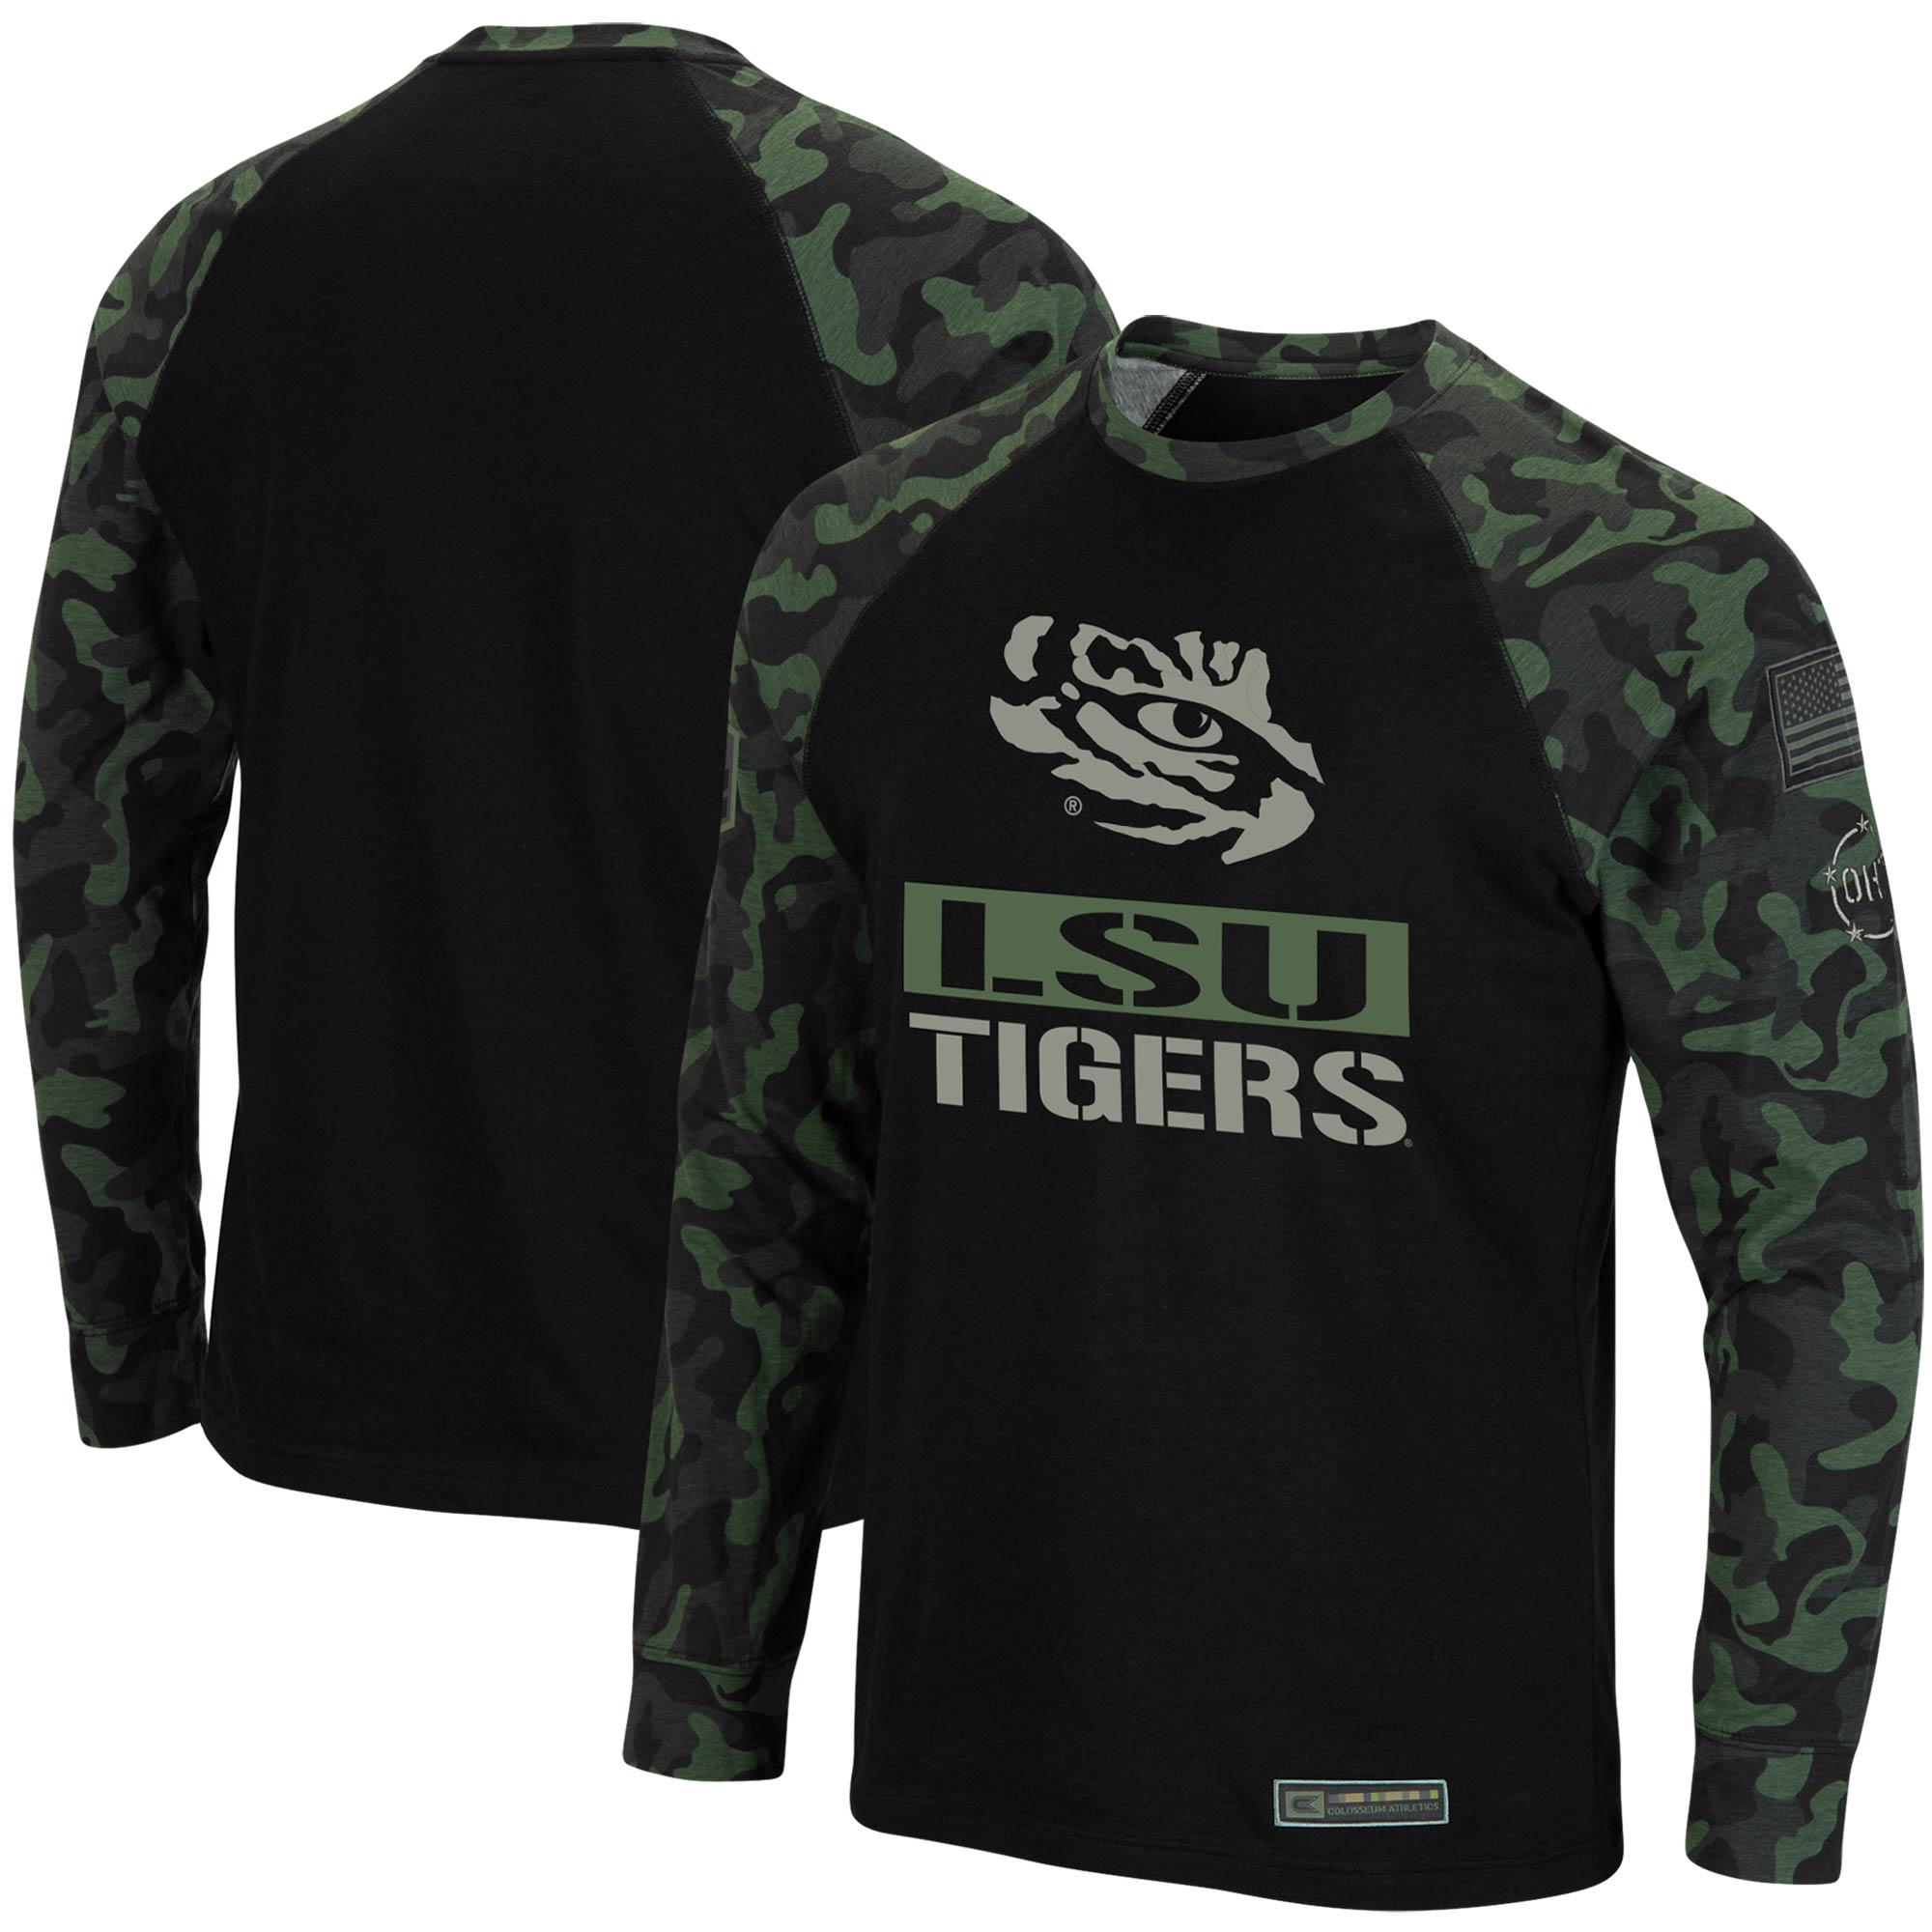 Men's Colosseum Black/Camo LSU Tigers OHT Military Appreciation Big & Tall Raglan Long Sleeve T-Shirt - image 1 of 4